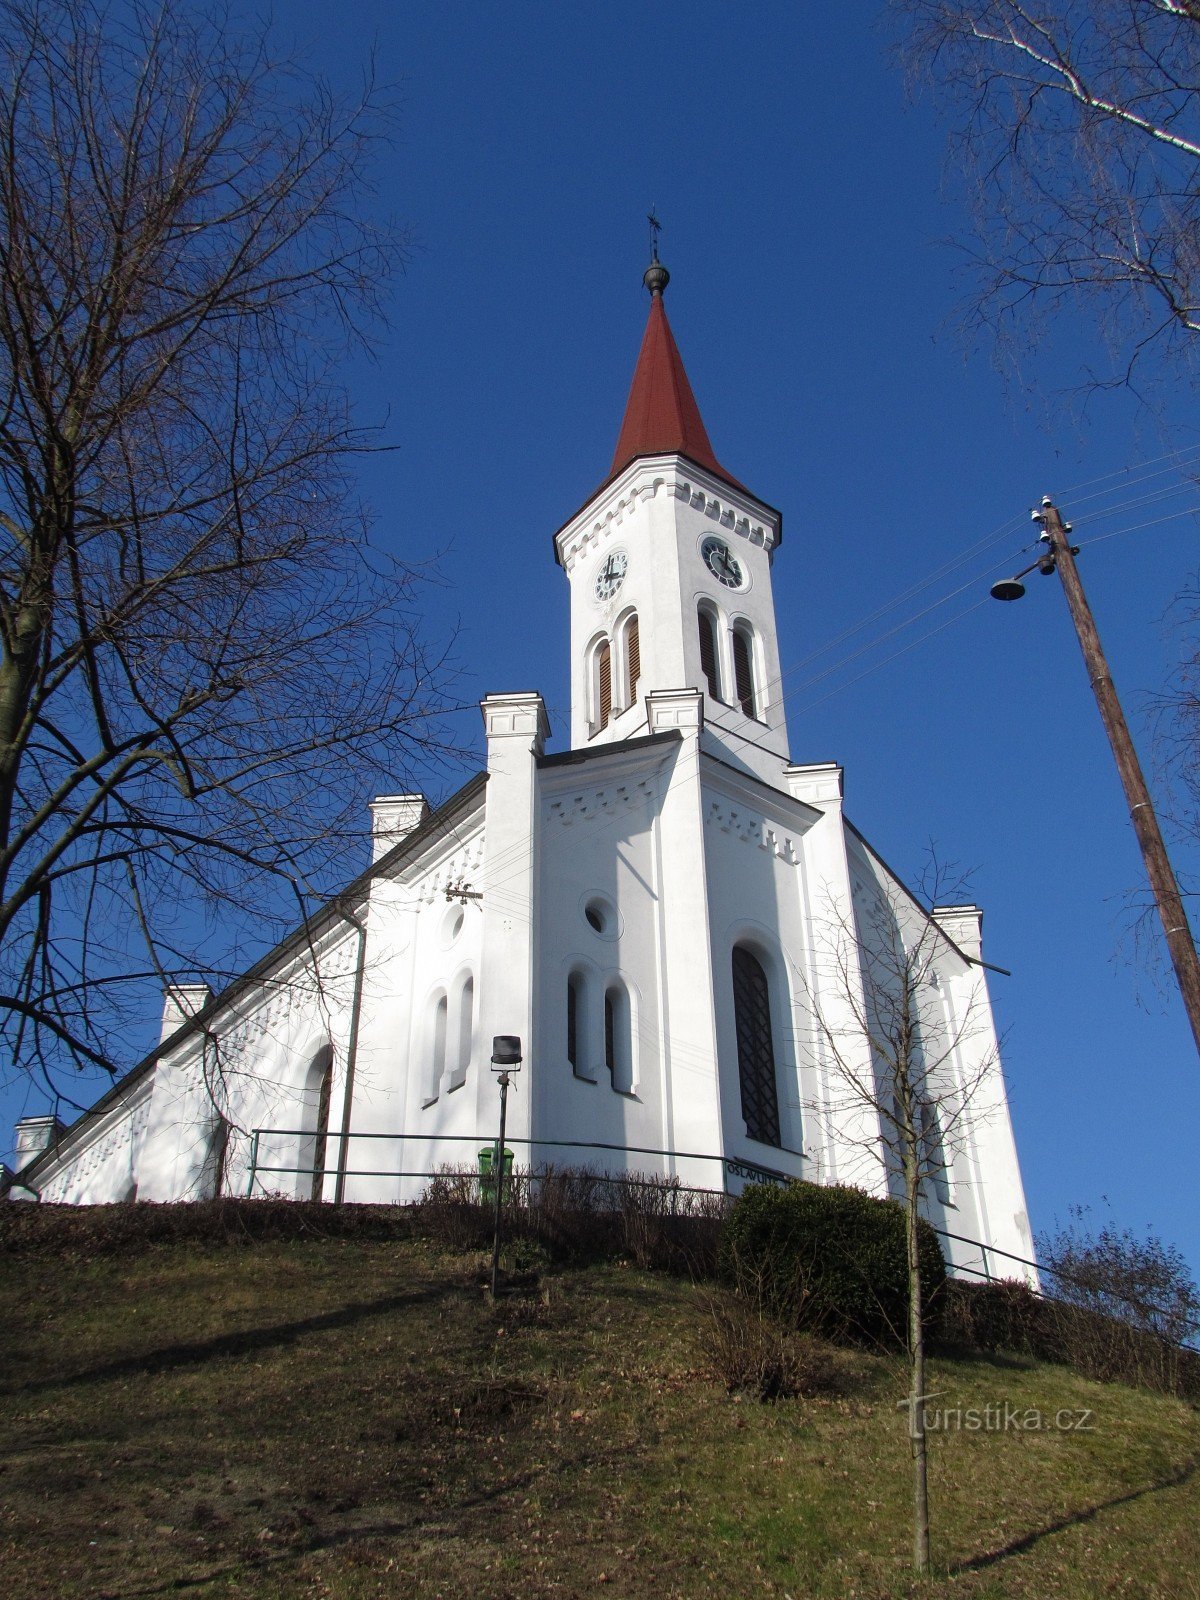 Zádveřice-Raková - evangélikus templom